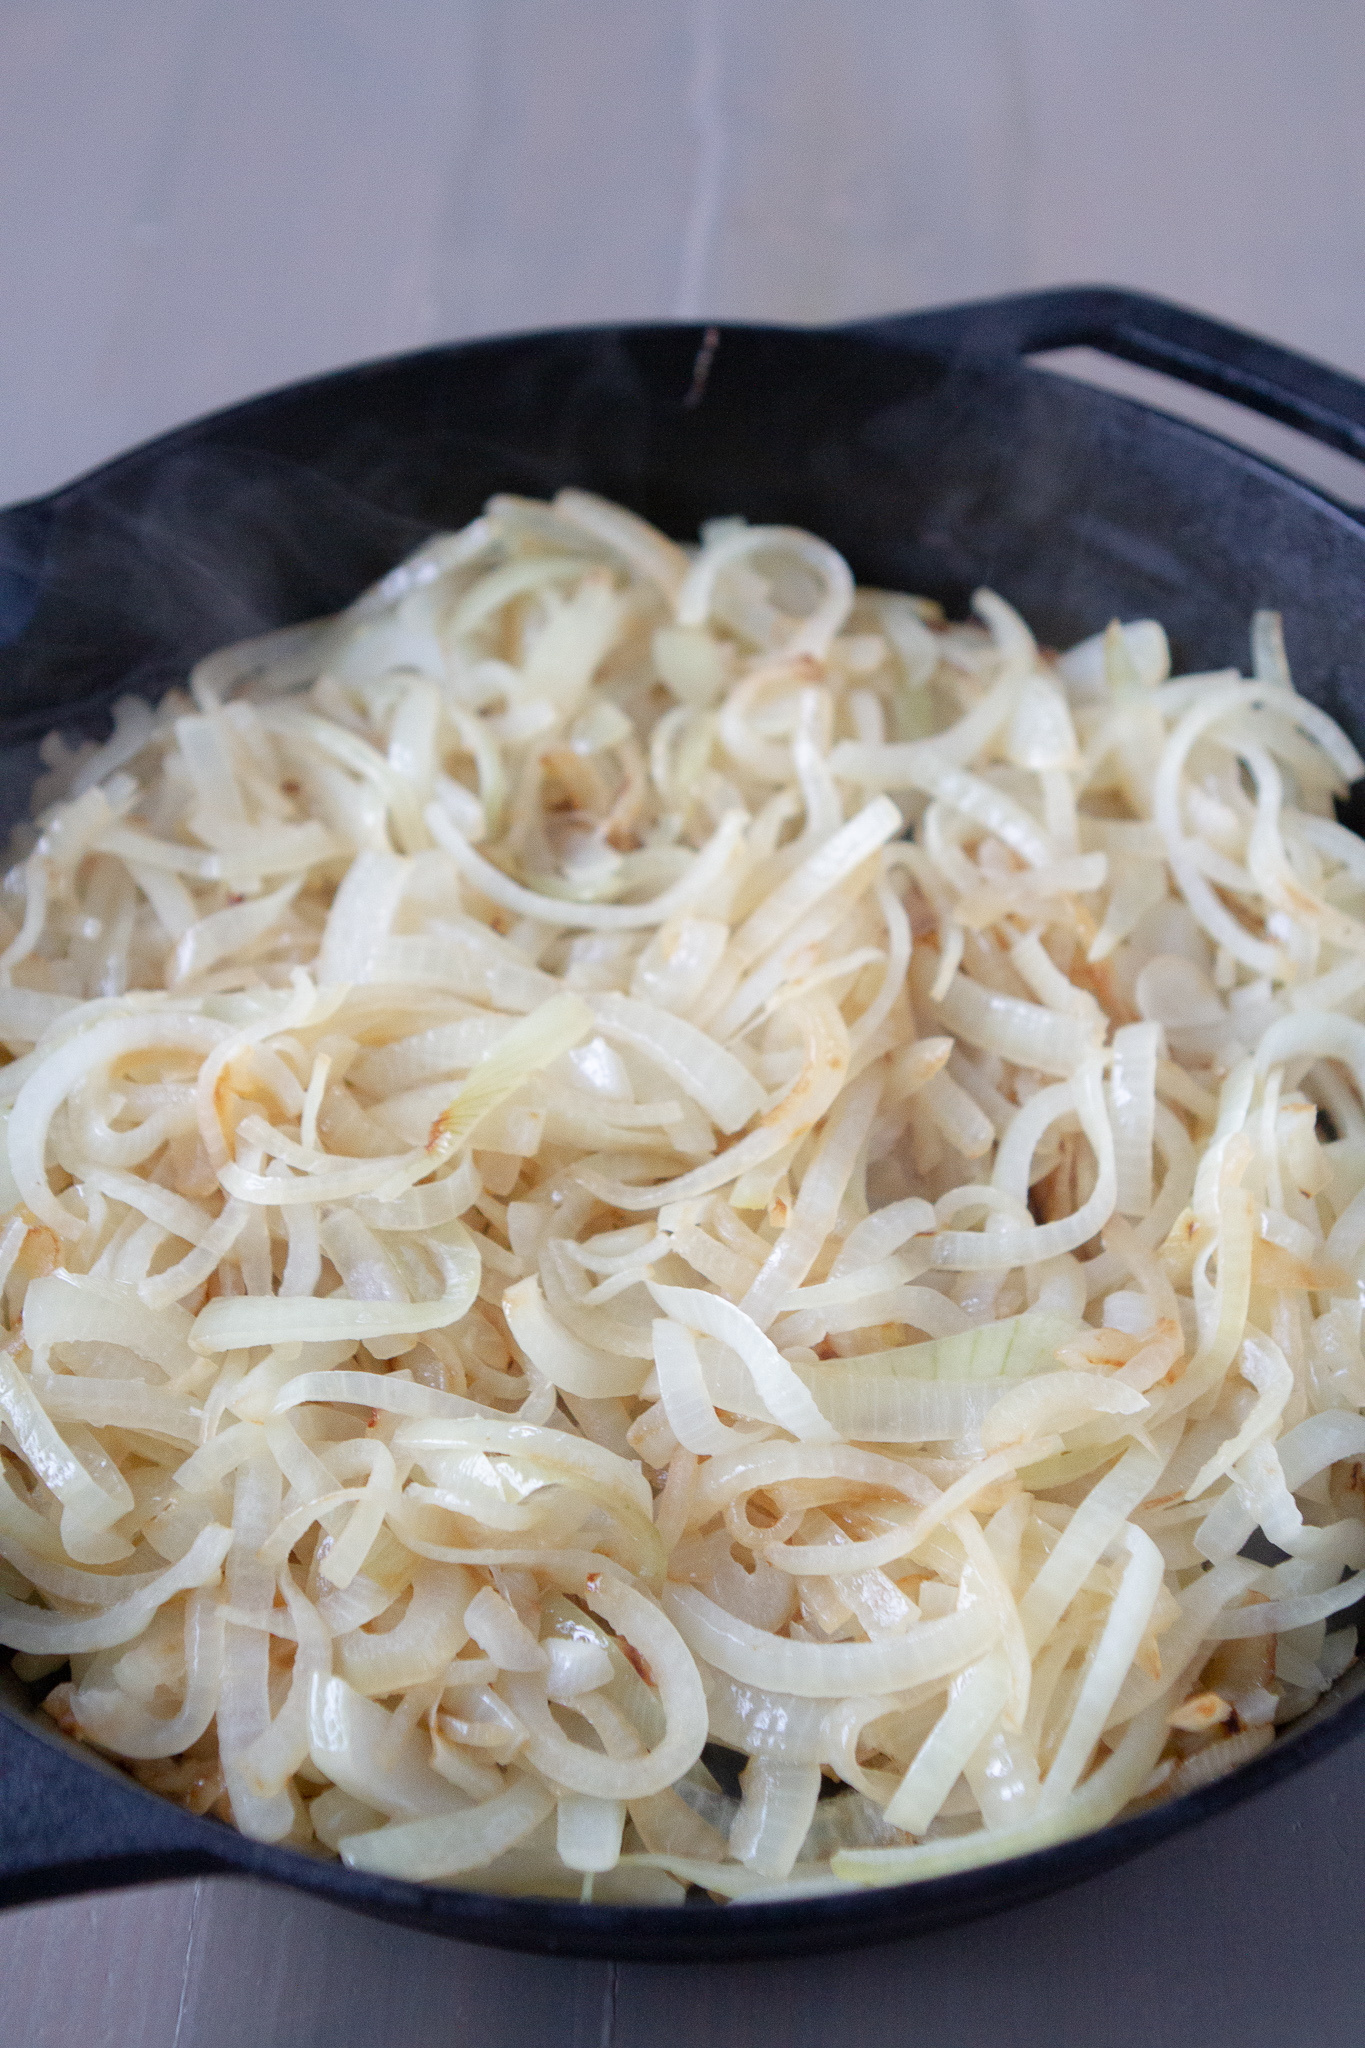 carmalized onions